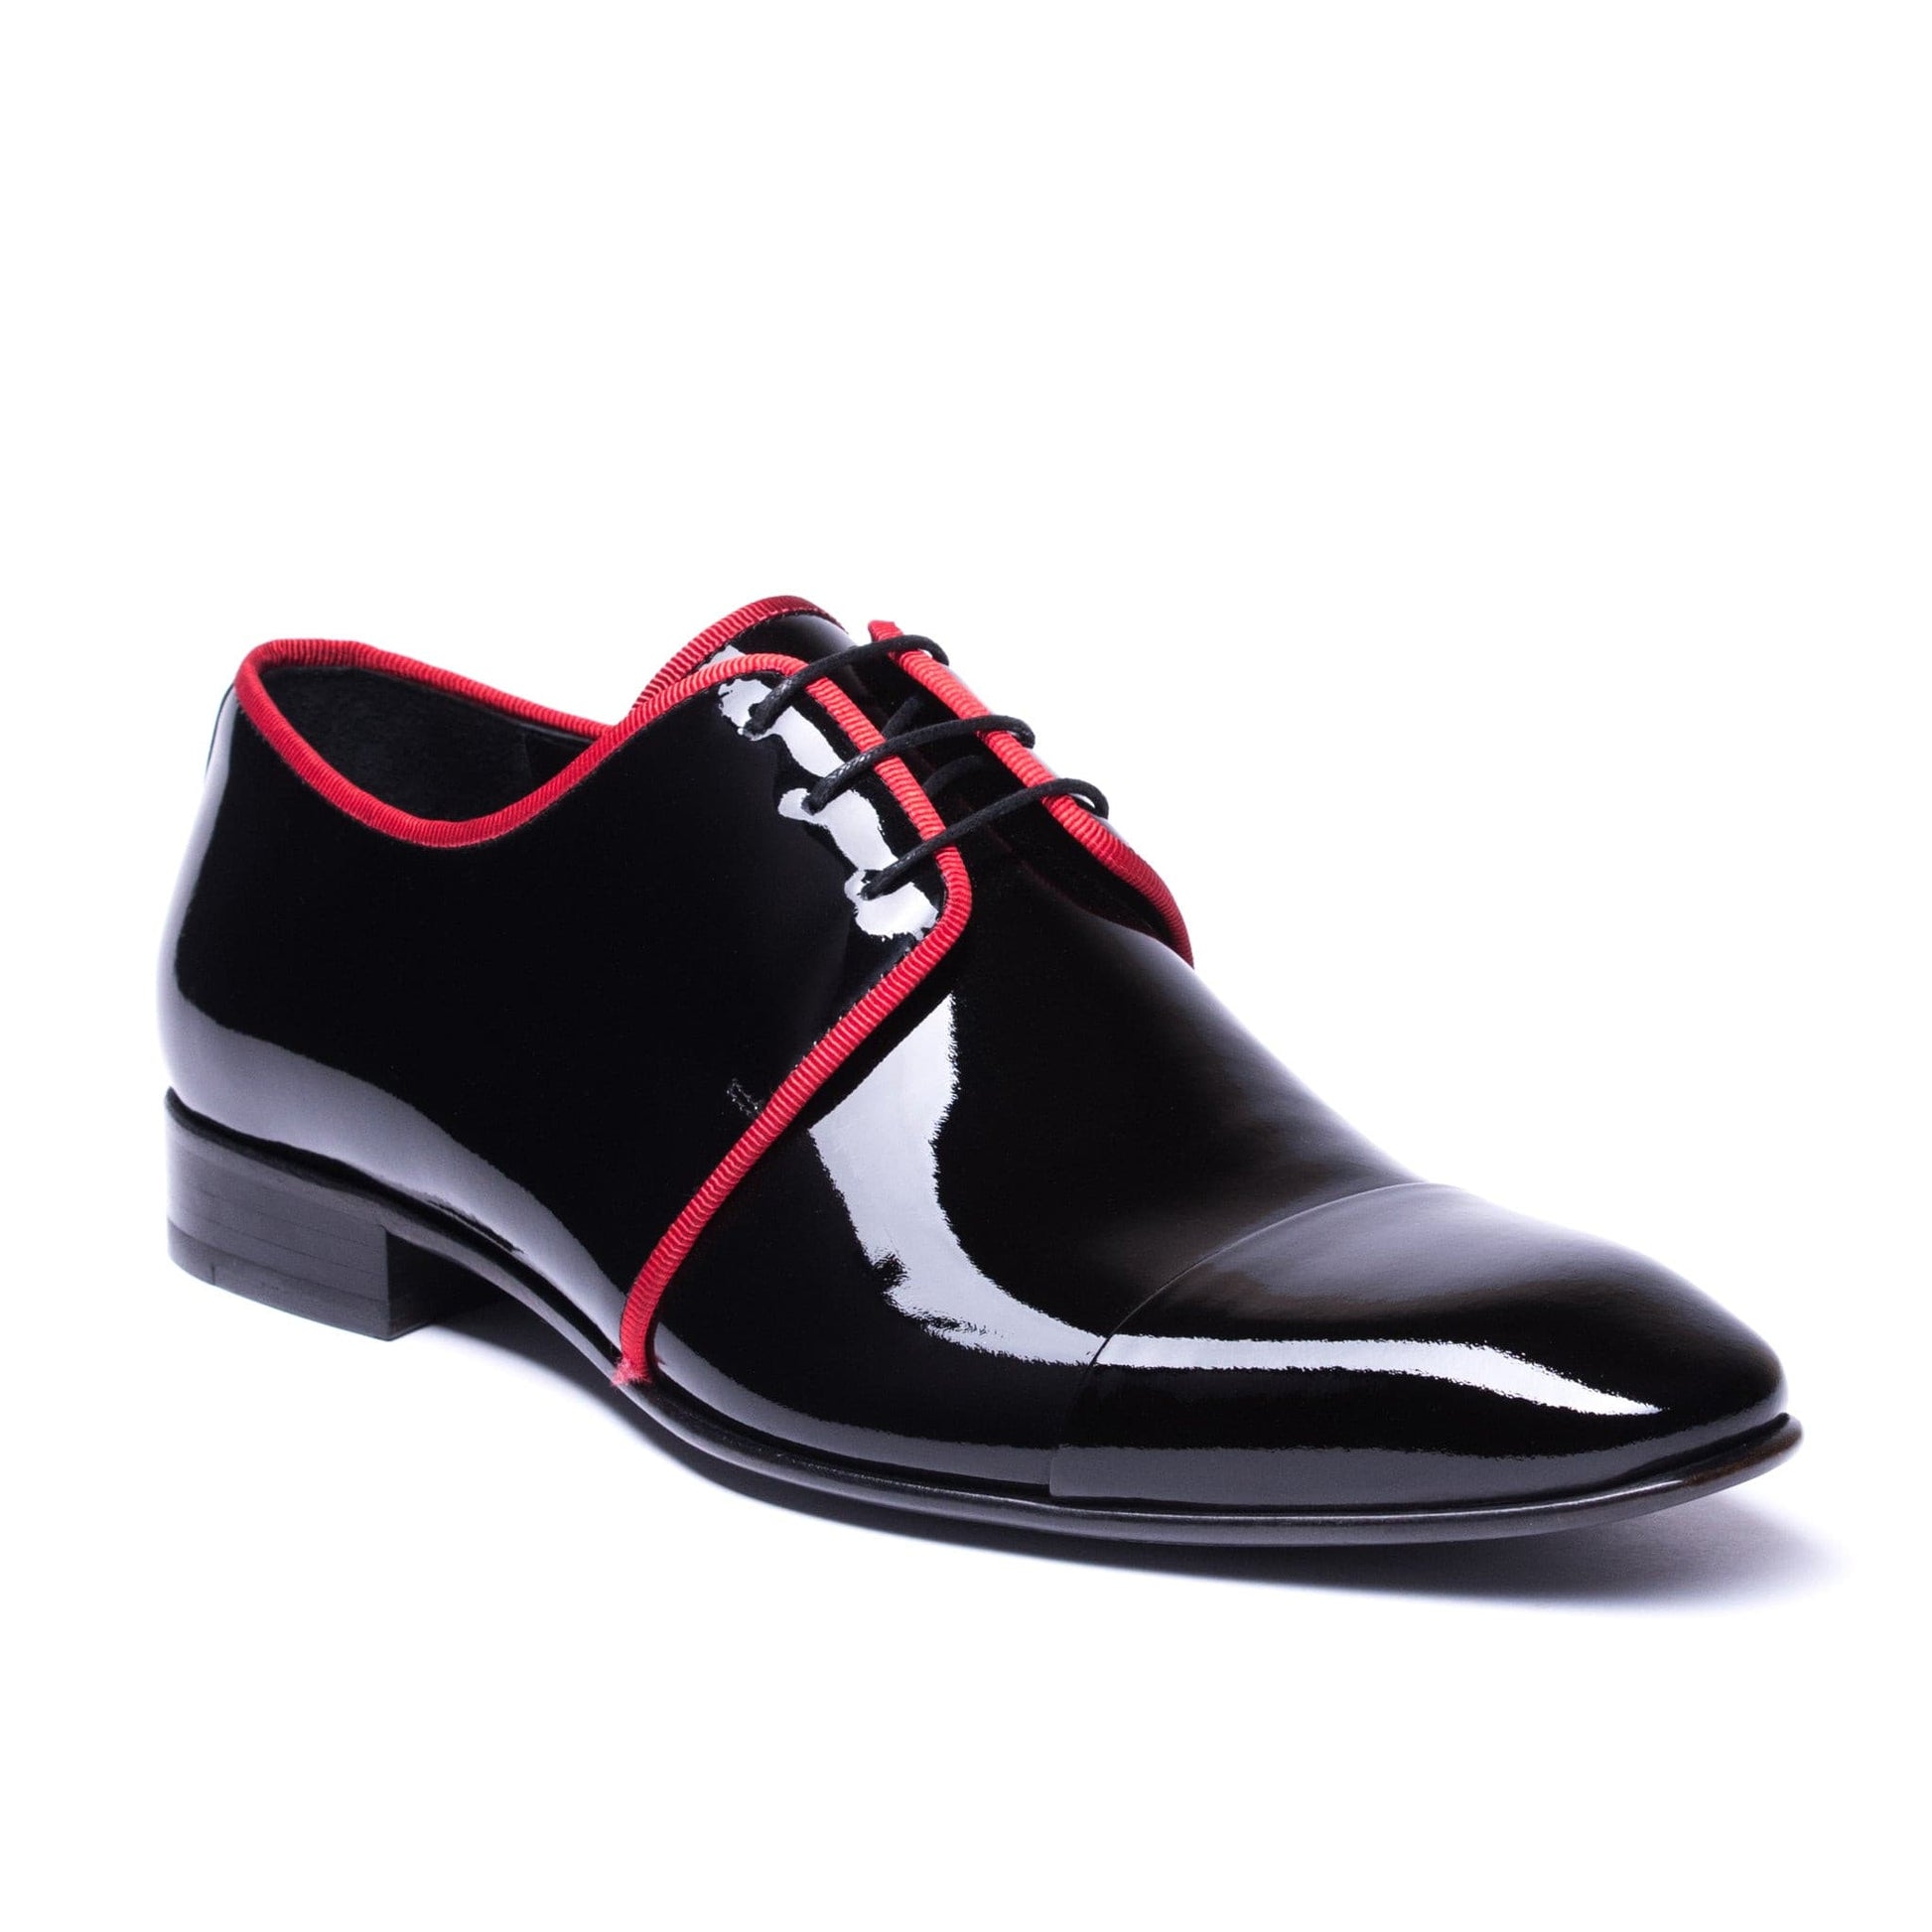 Black Patent Leather Formal Dress Shoes 8426-BK.